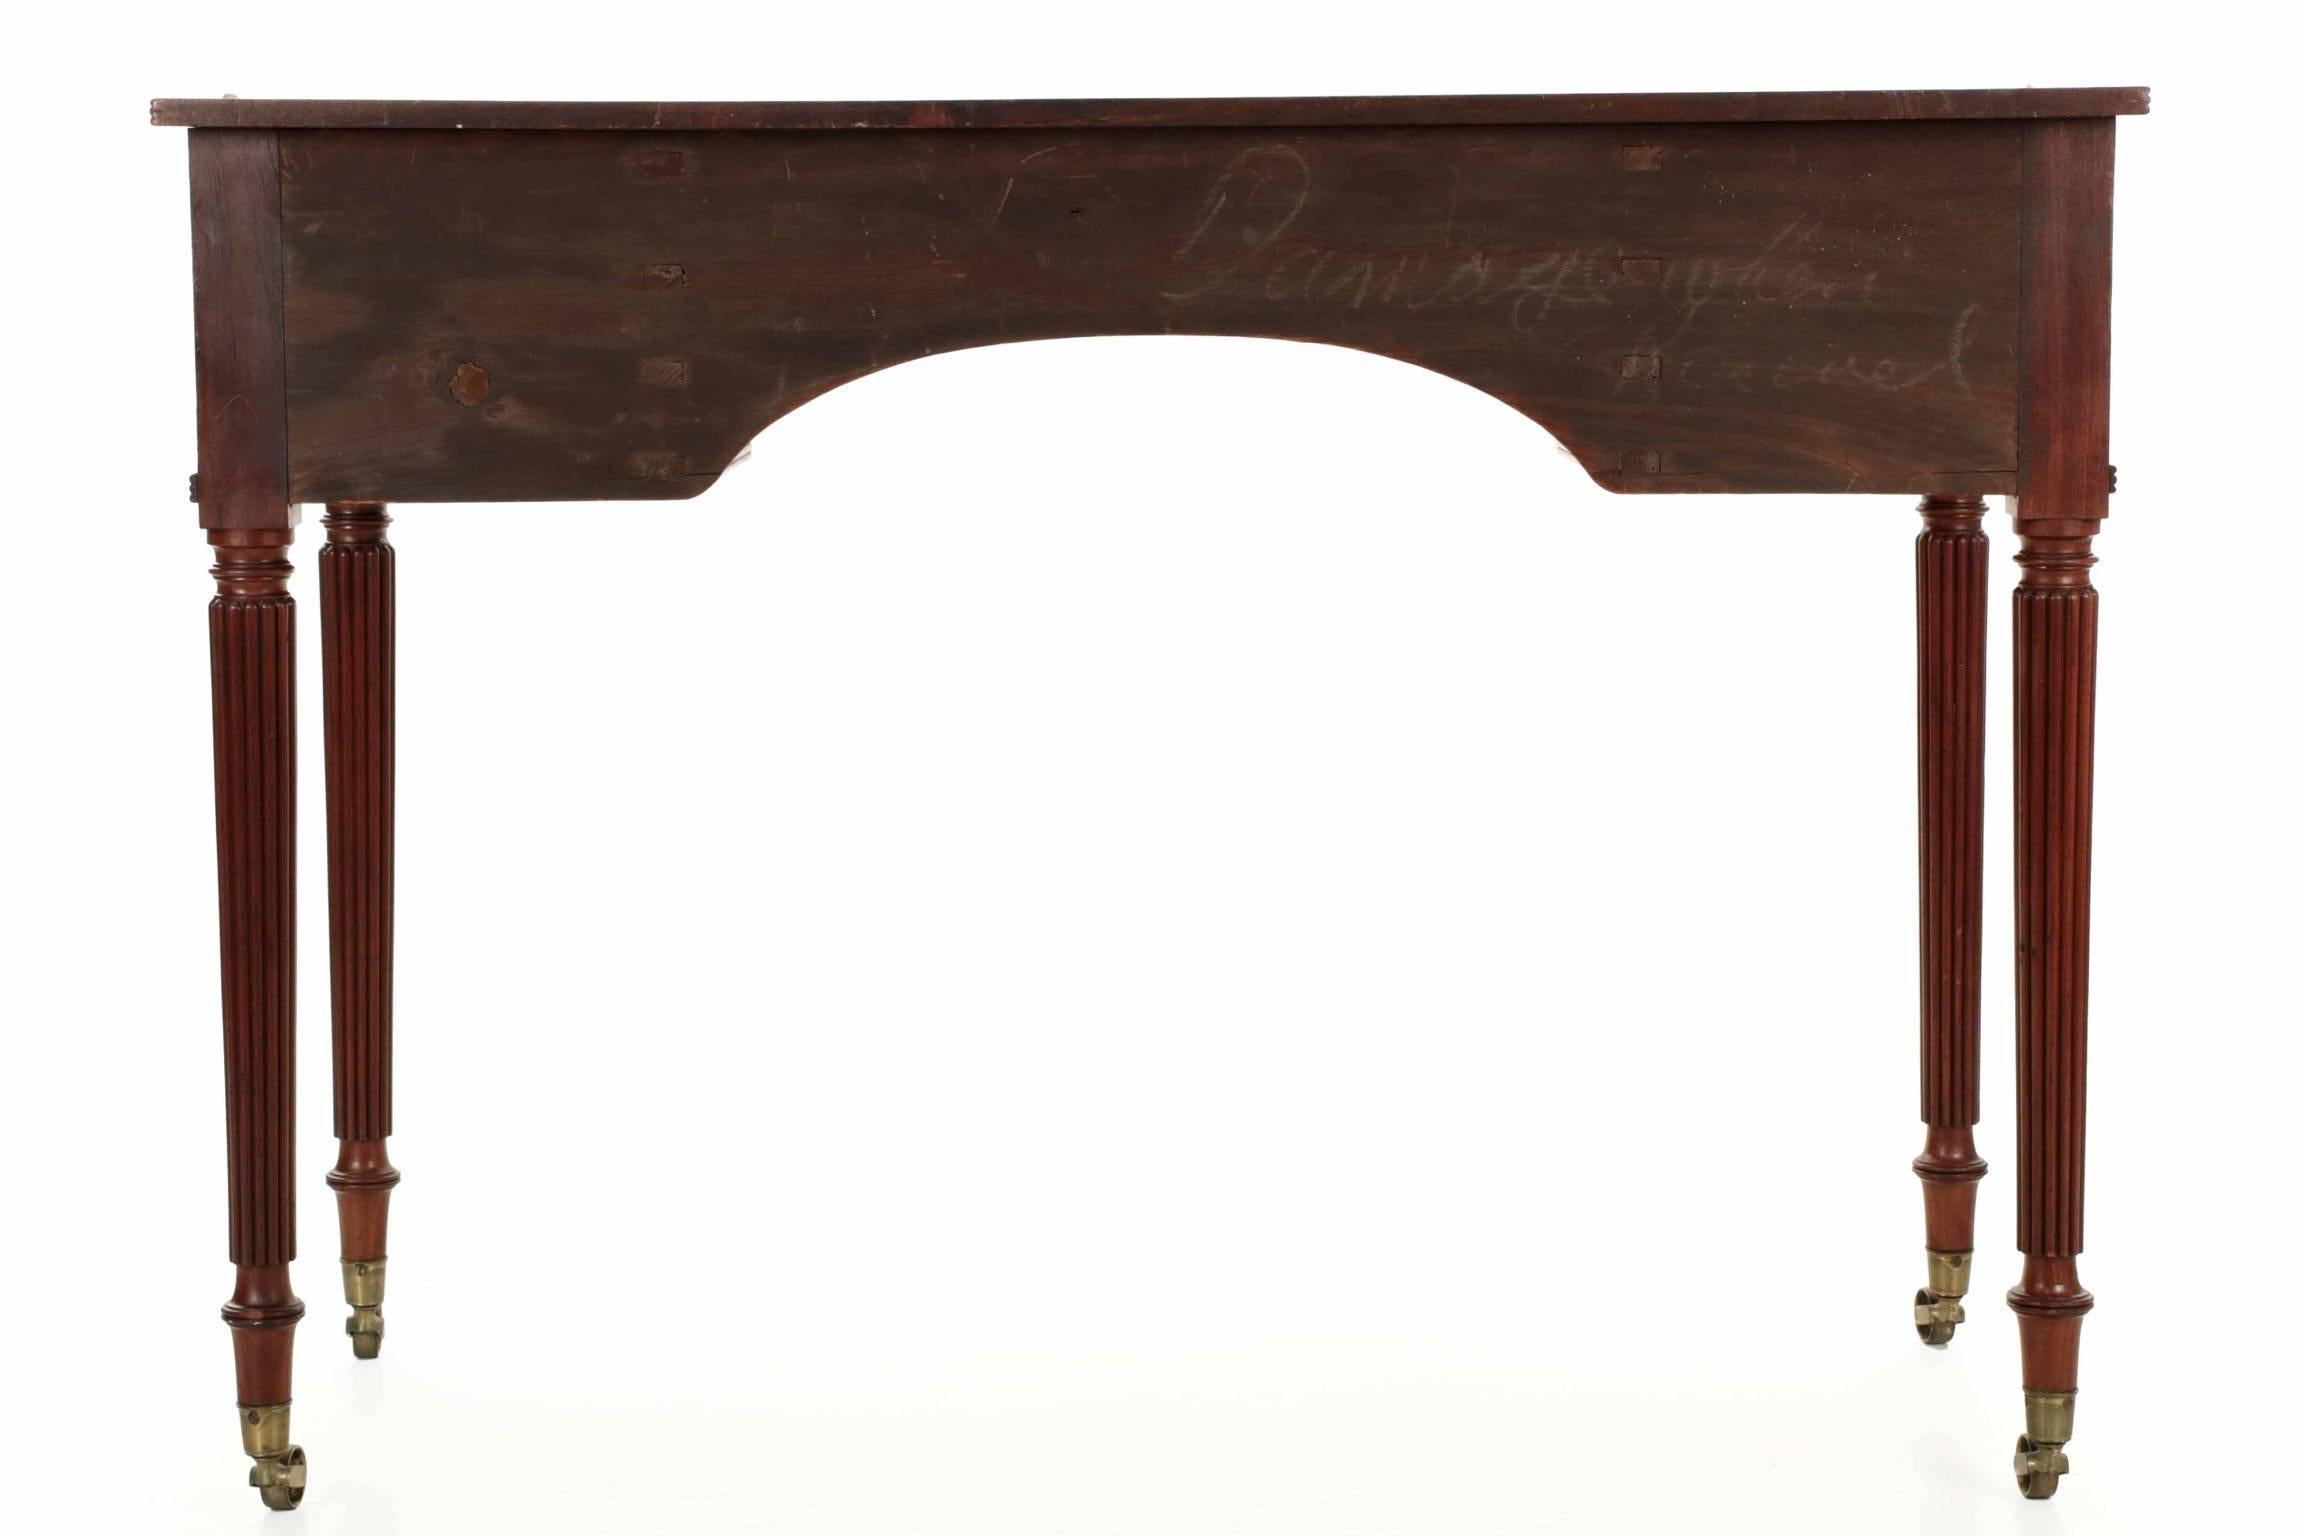 19th Century English Regency Period Mahogany & Leather Antique Writing Desk Table c. 1815-30